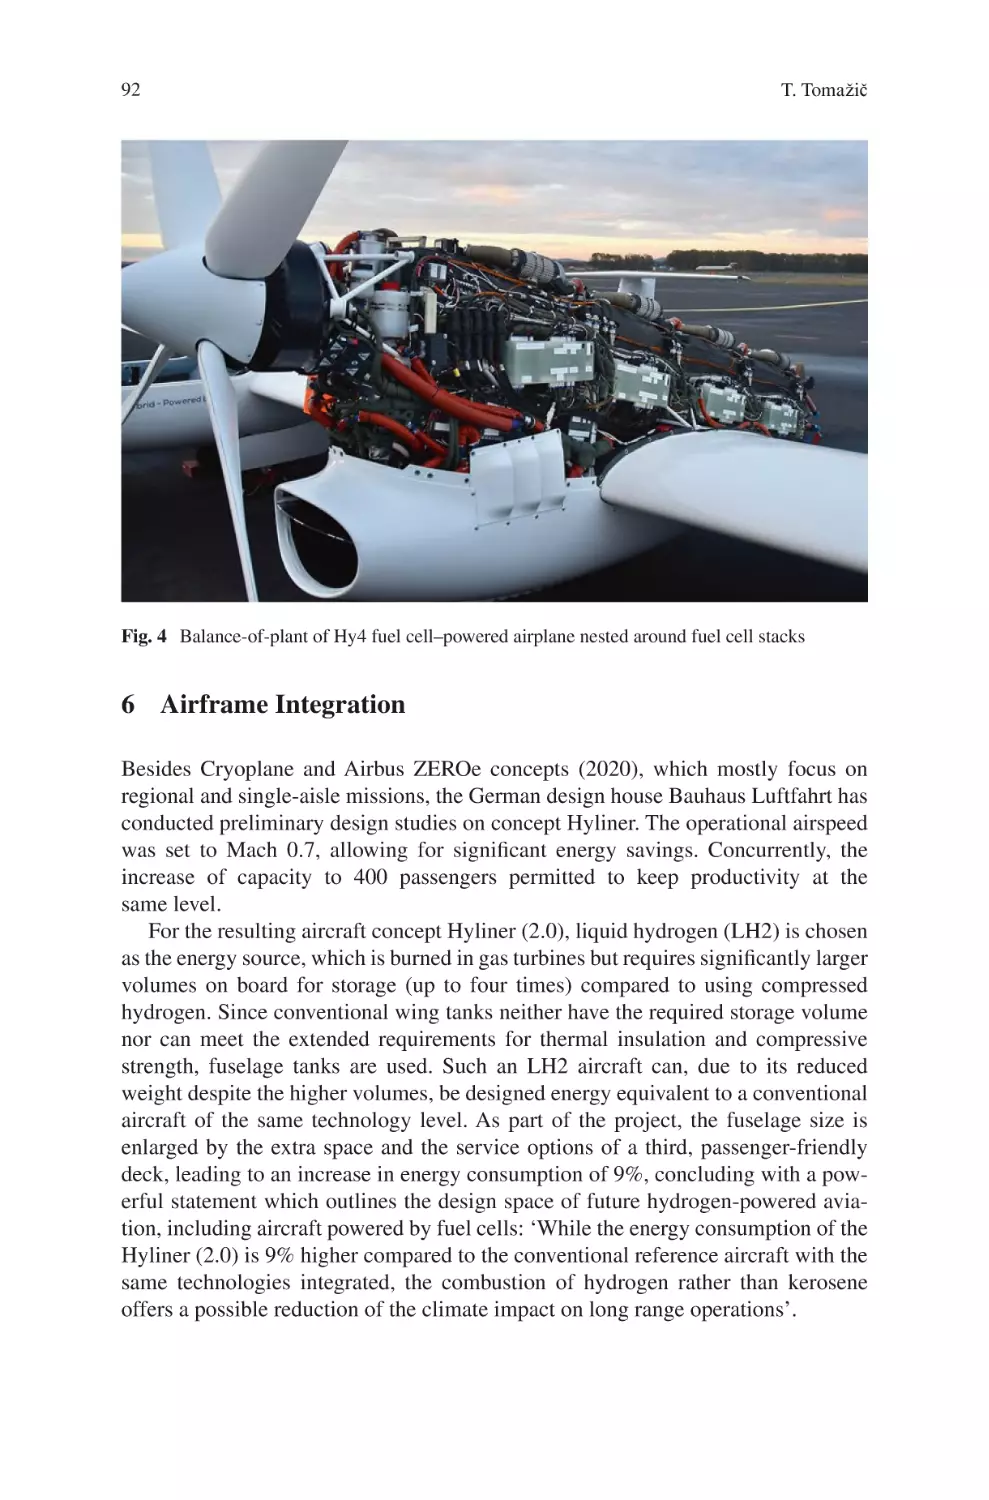 6 Airframe Integration